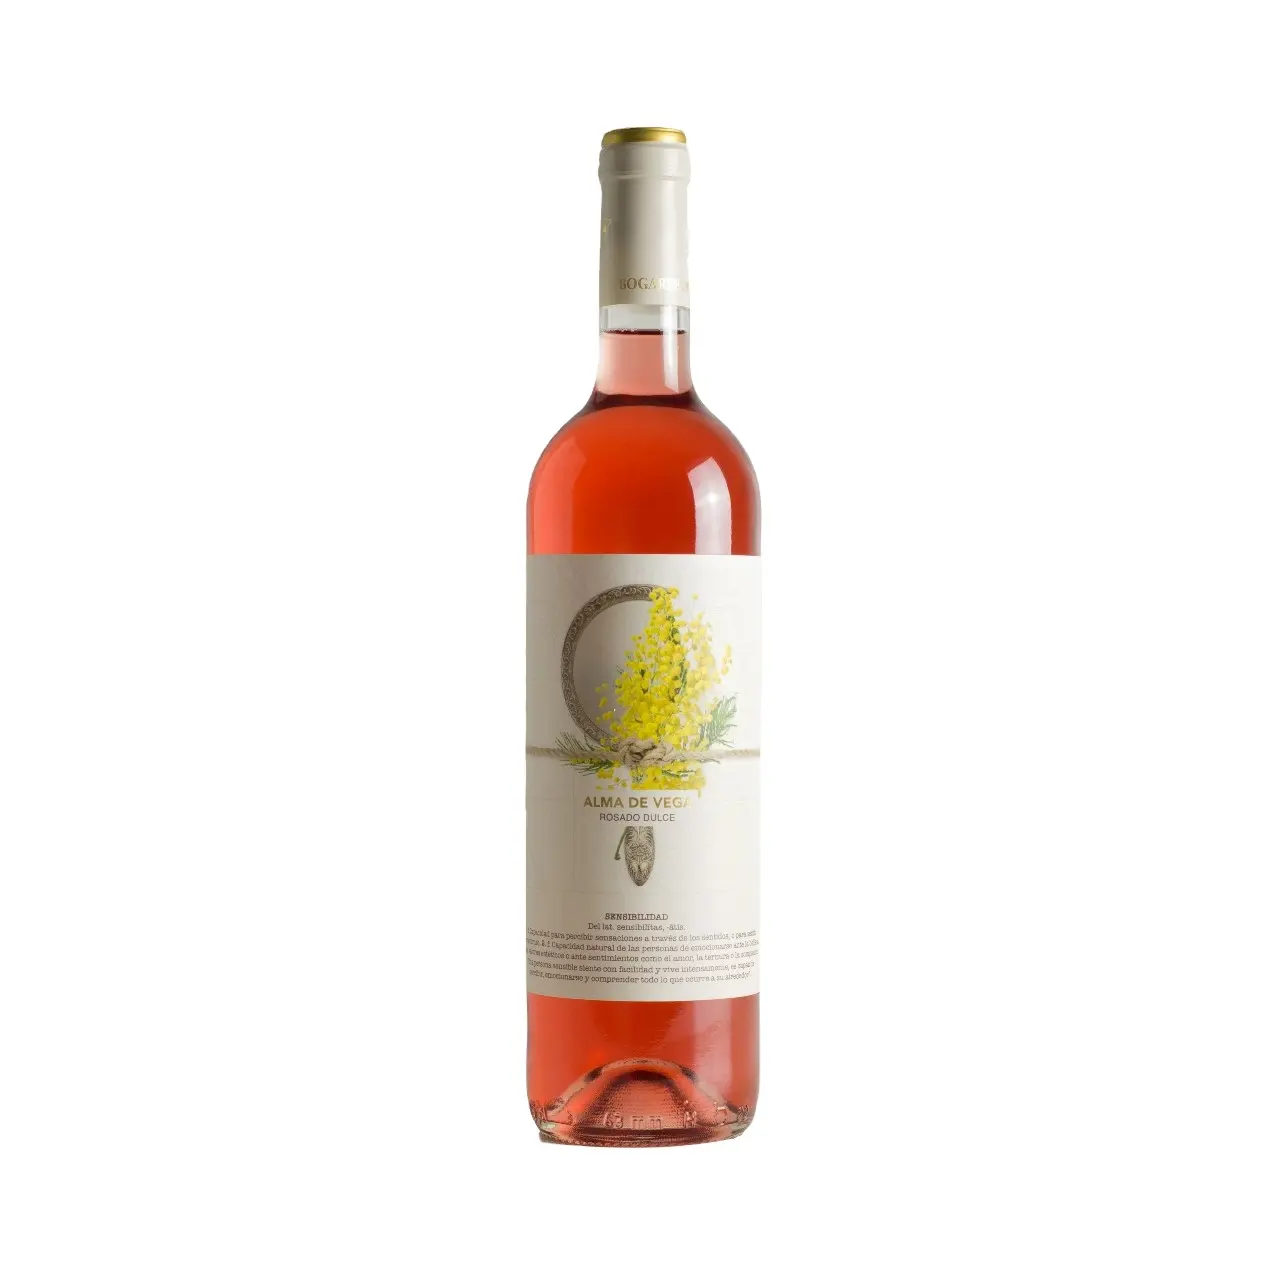 Best fruity spanish sweet rose wine garnacha 75cl bottle of glass for restaurant and supermarket